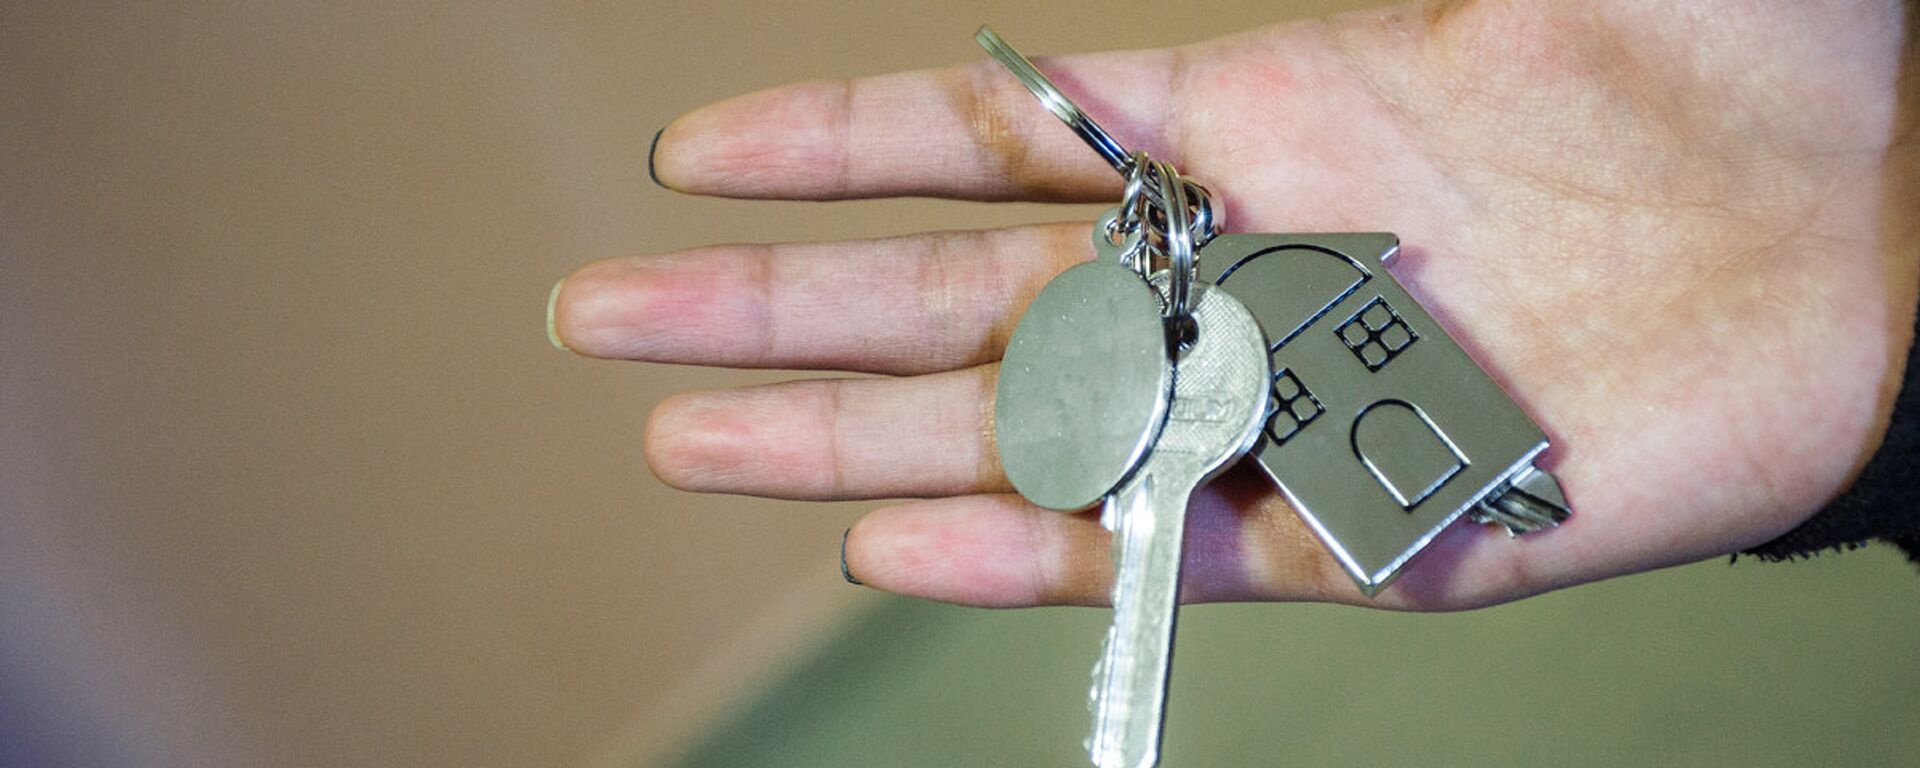 Ключи от квартиры - Sputnik Latvija, 1920, 19.04.2021